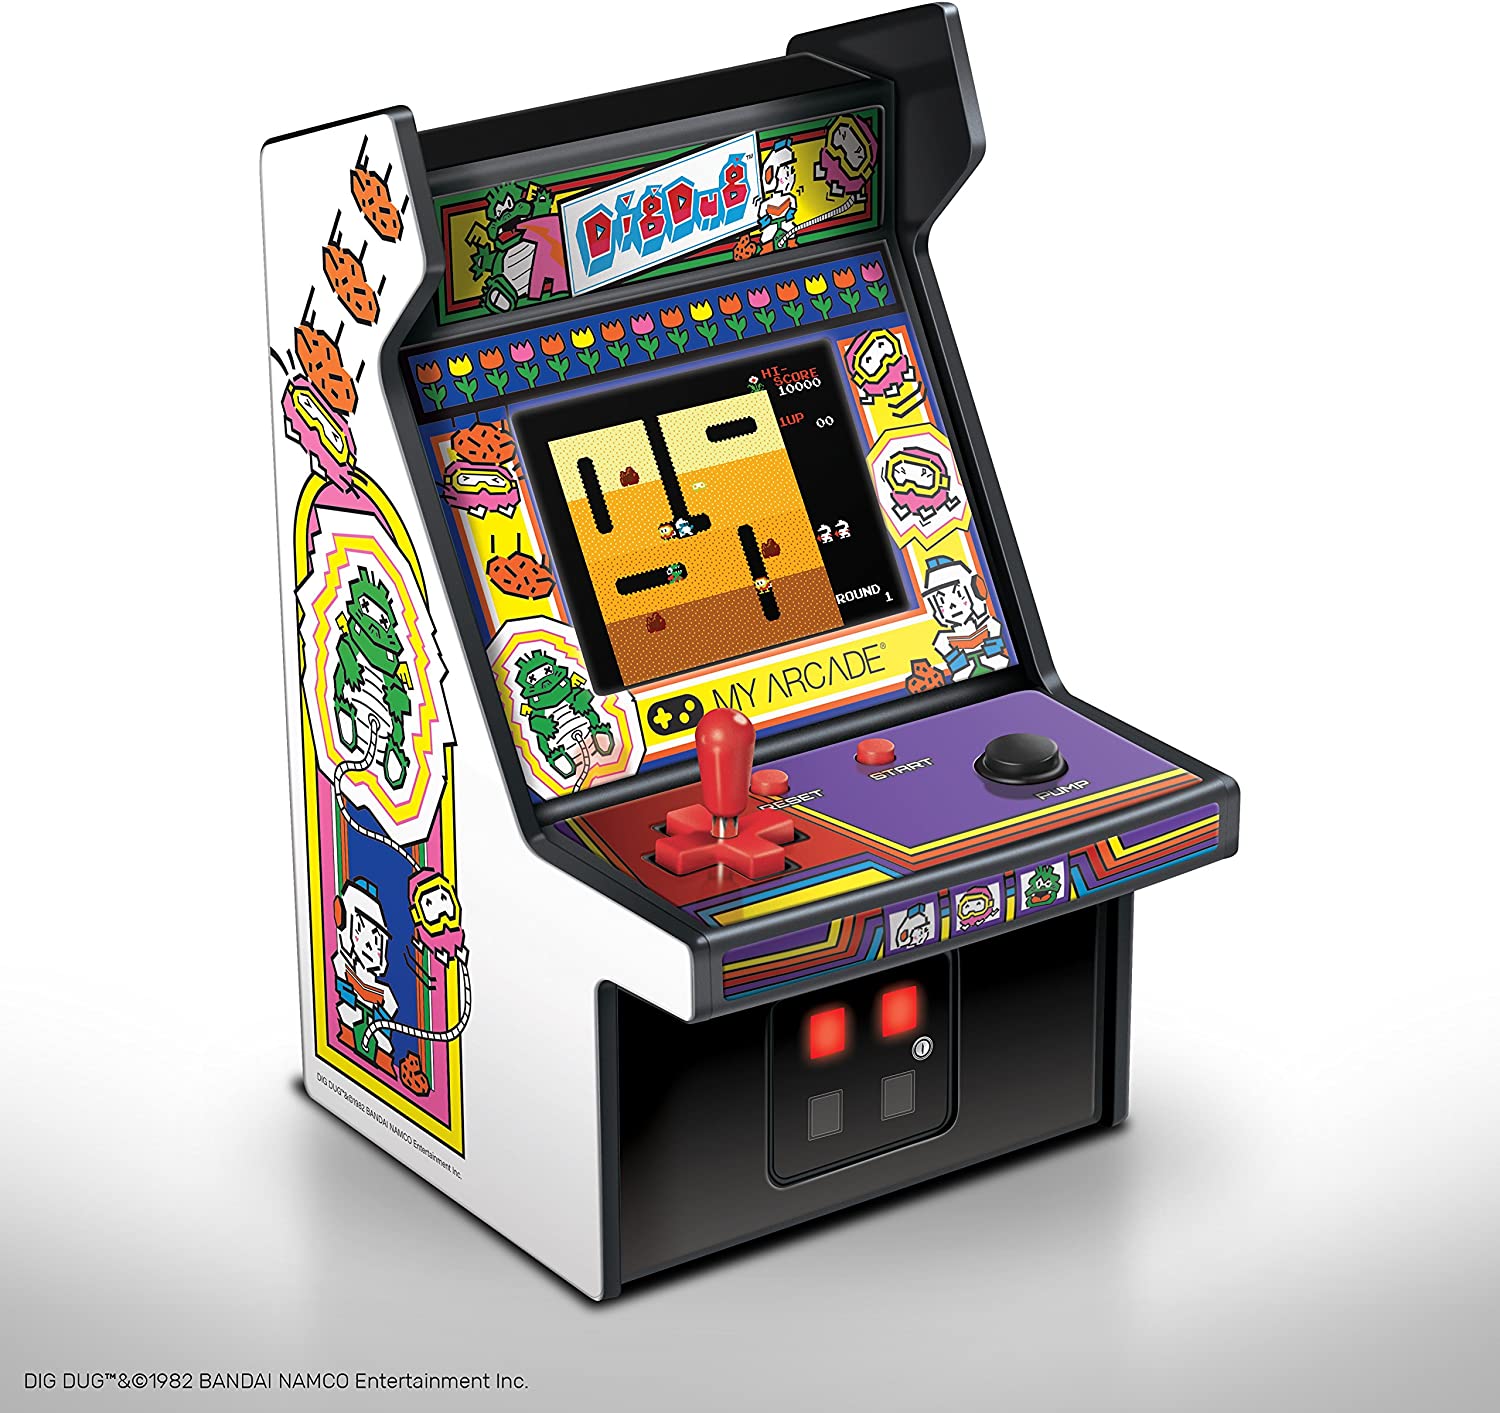 § My Arcade - DIG DUG Micro Player